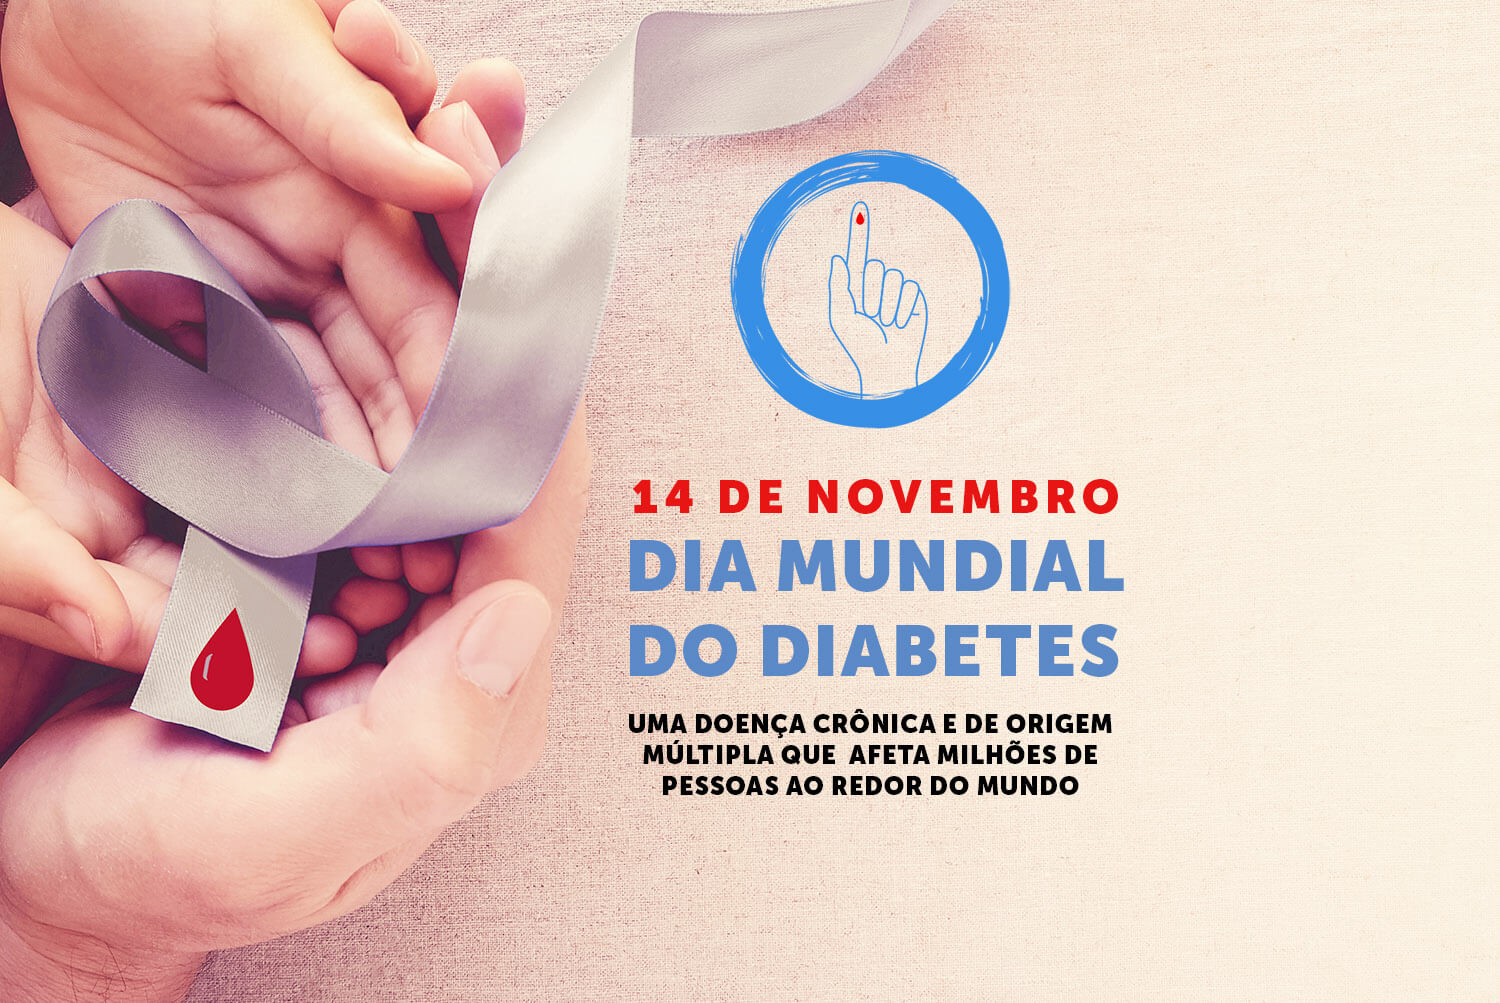 Dia Mundial do Diabetes - Hospital Santa Virgínia